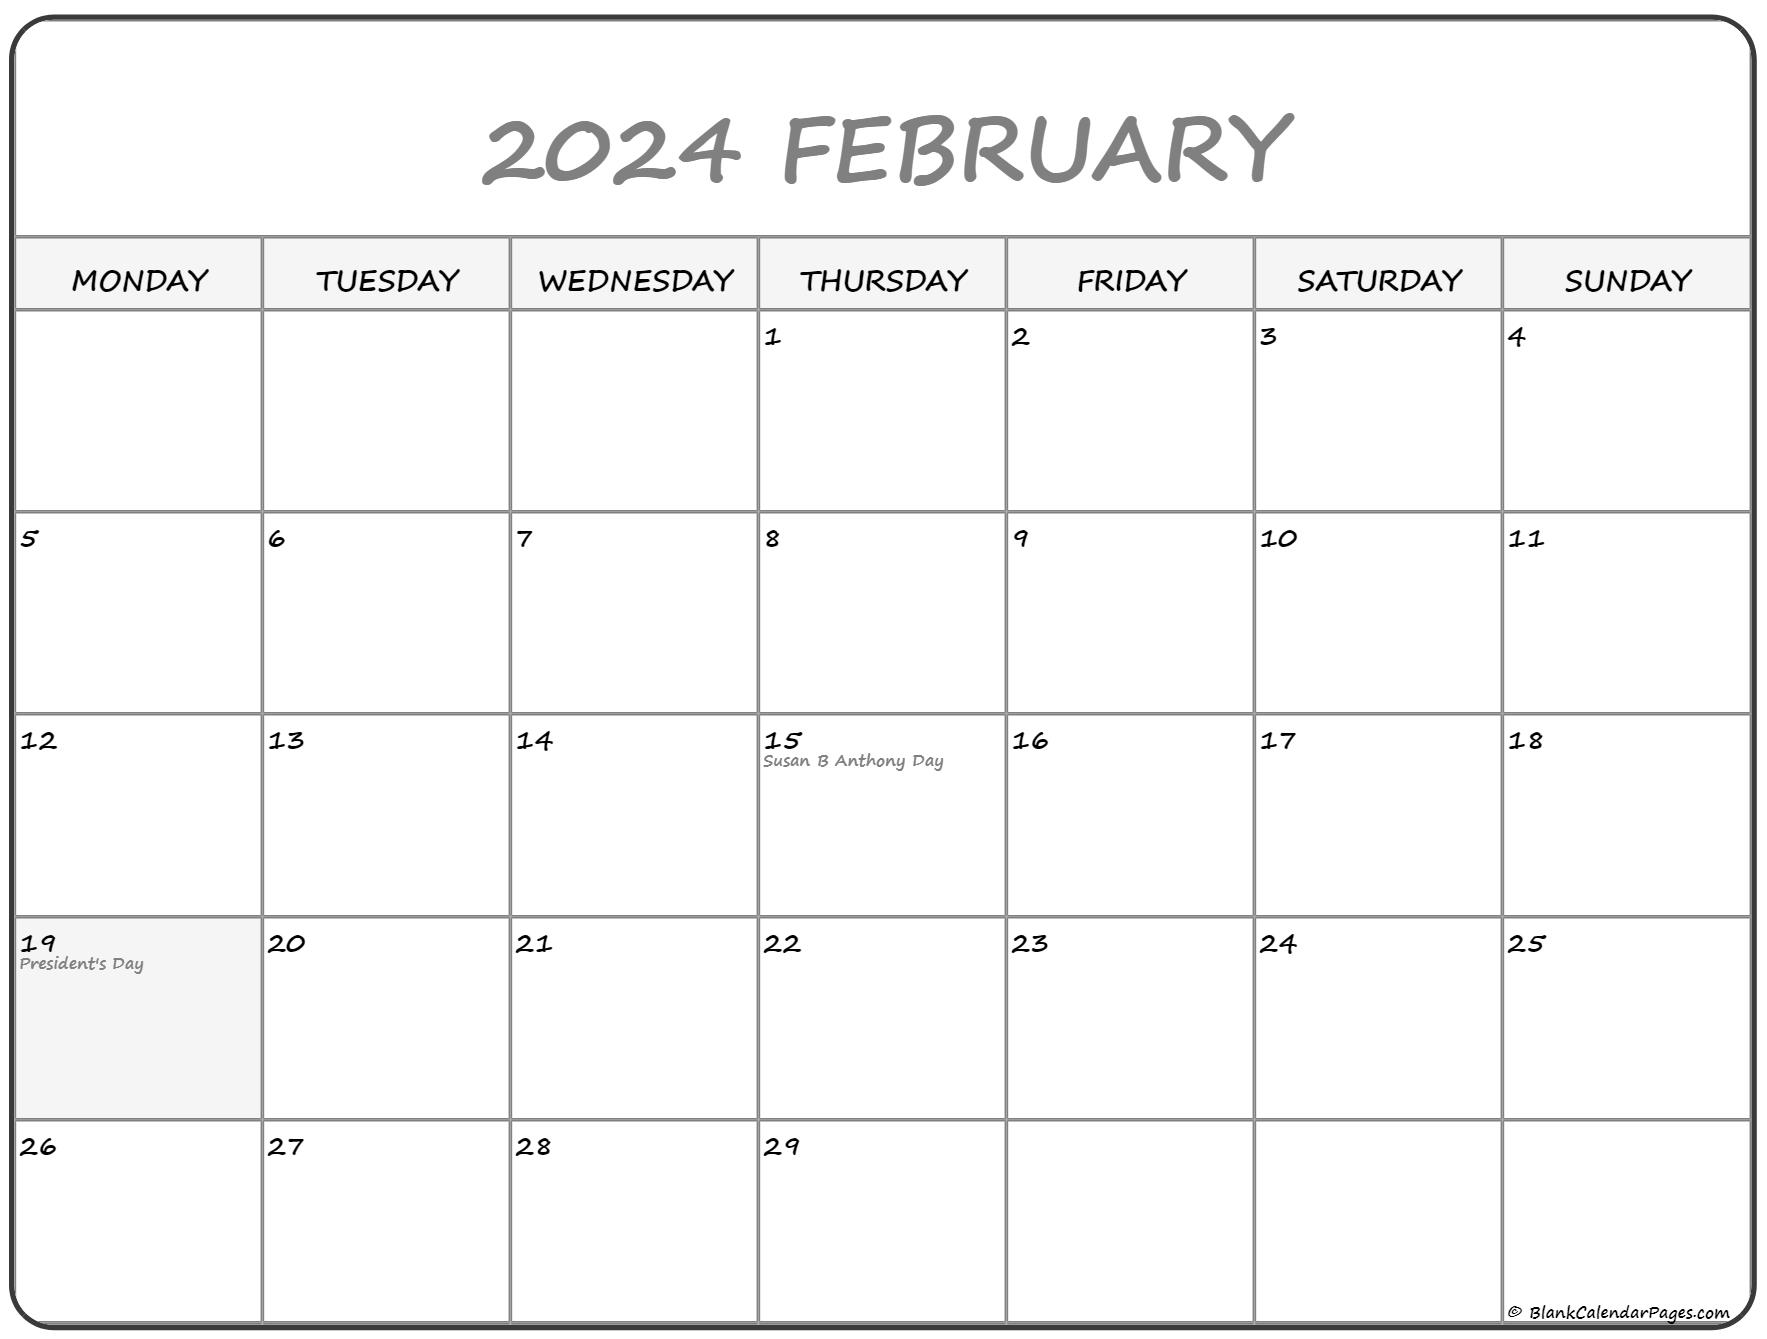 February 2022 Monday Calendar Monday to Sunday